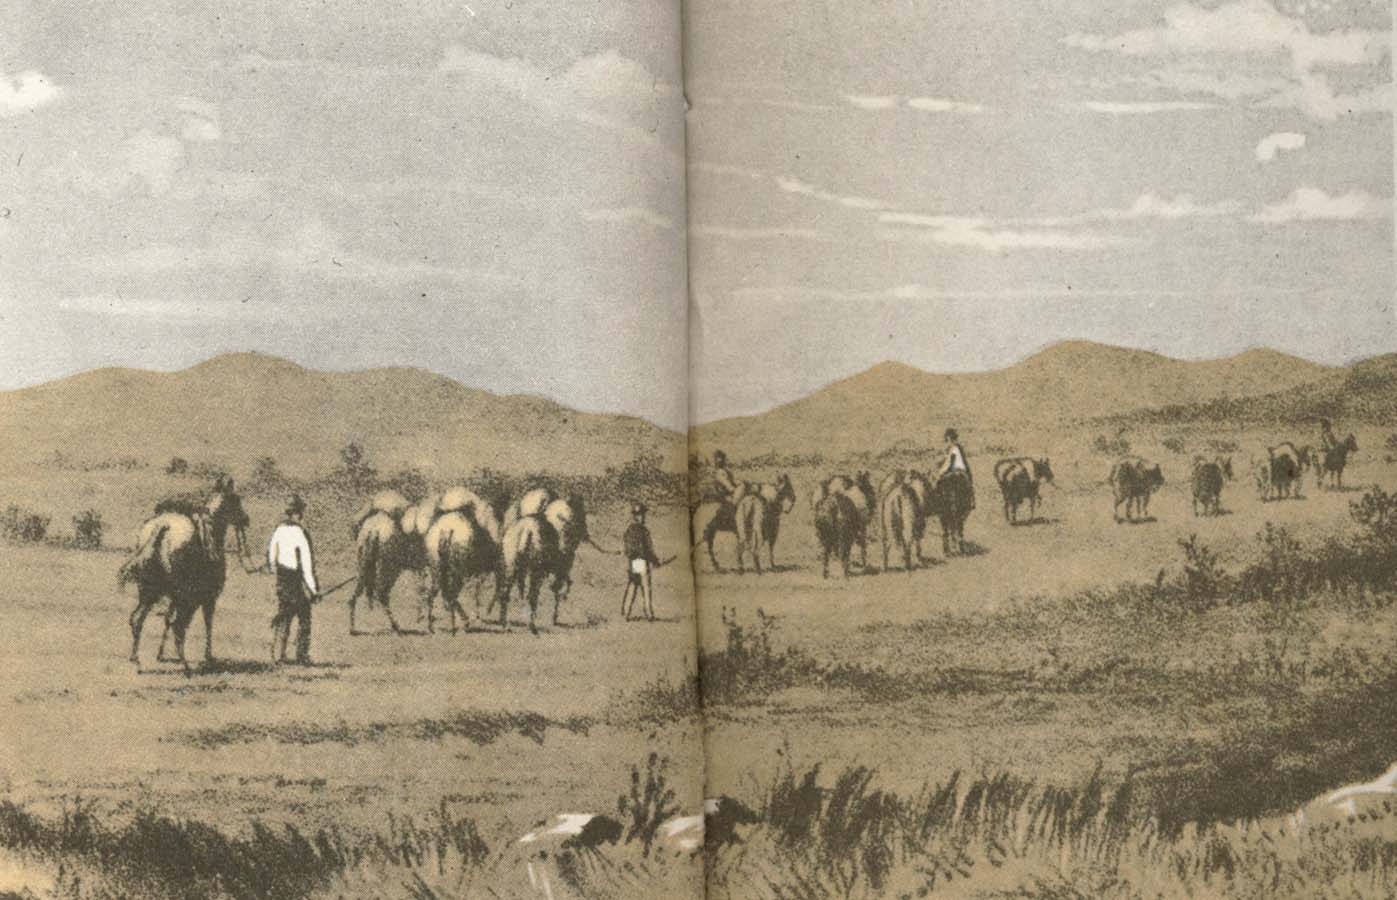 fohn forres expedition rastar nara murchison flodes kallor under farden 1874 fran vastra australien till telrgraflinjen soder om alice springs.